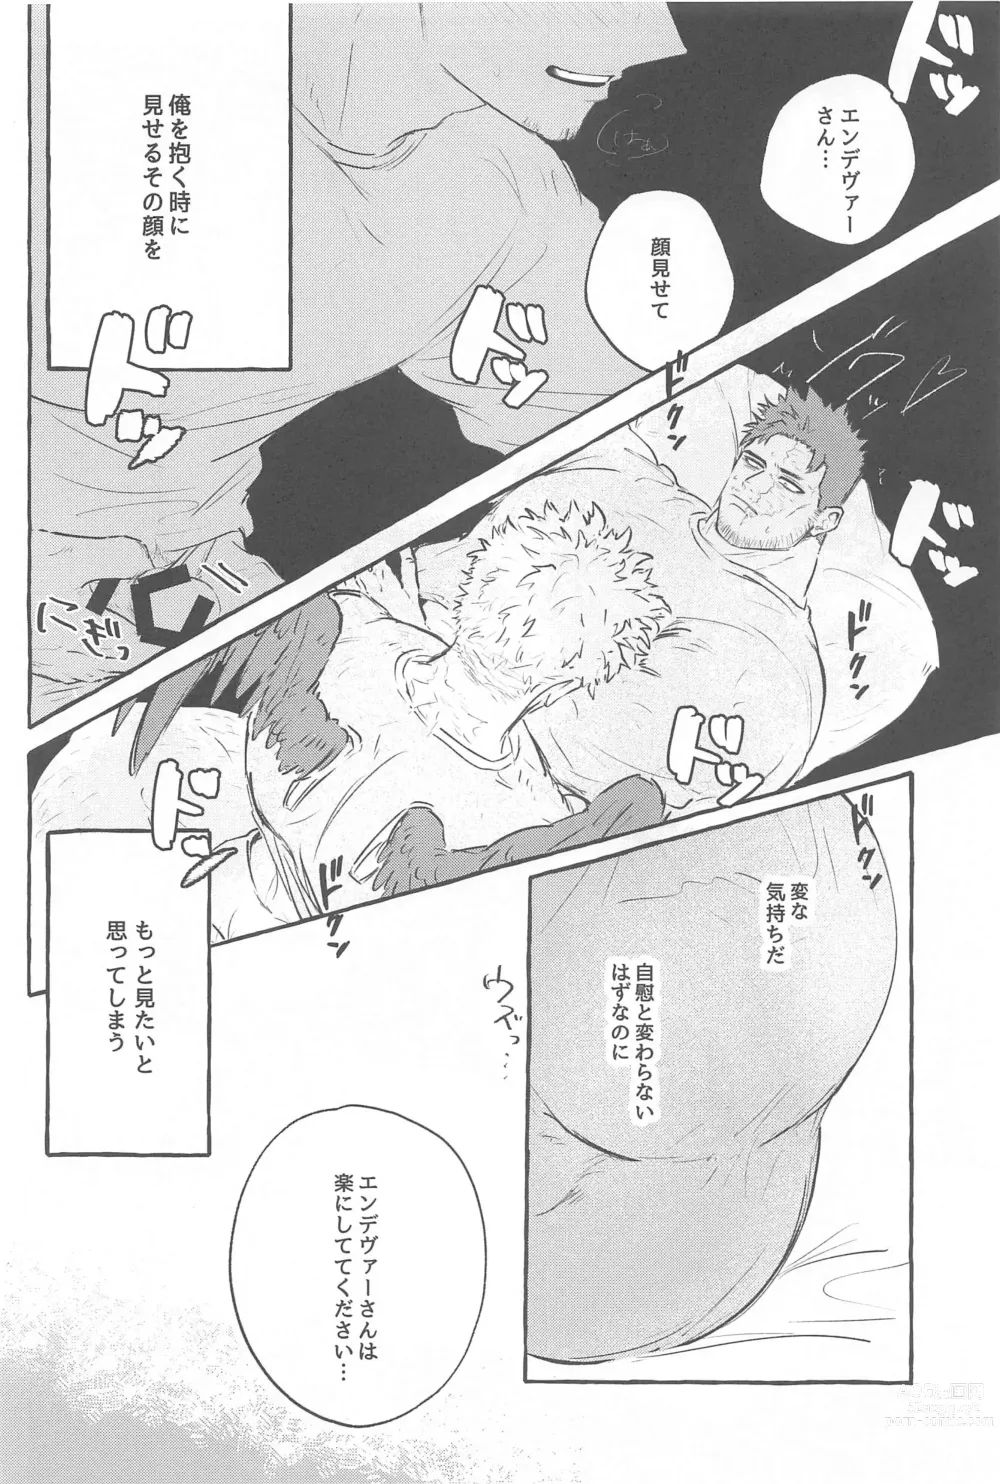 Page 17 of doujinshi Warrgle Sengen